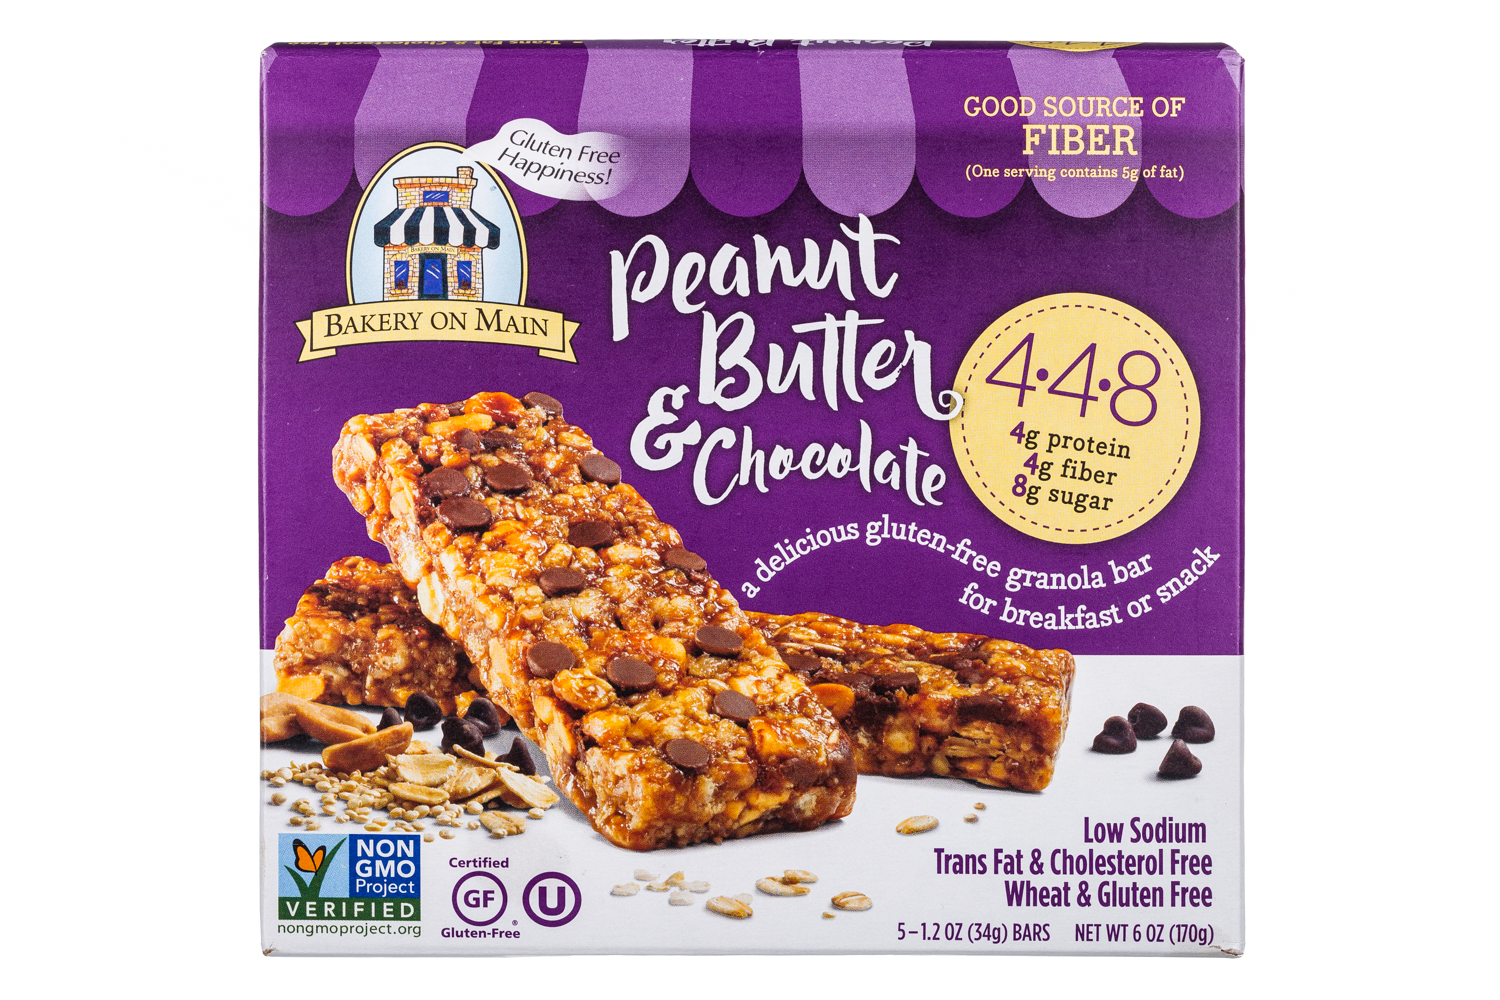 Peanut Butter & Chocolate Gluten-free Granola Bar